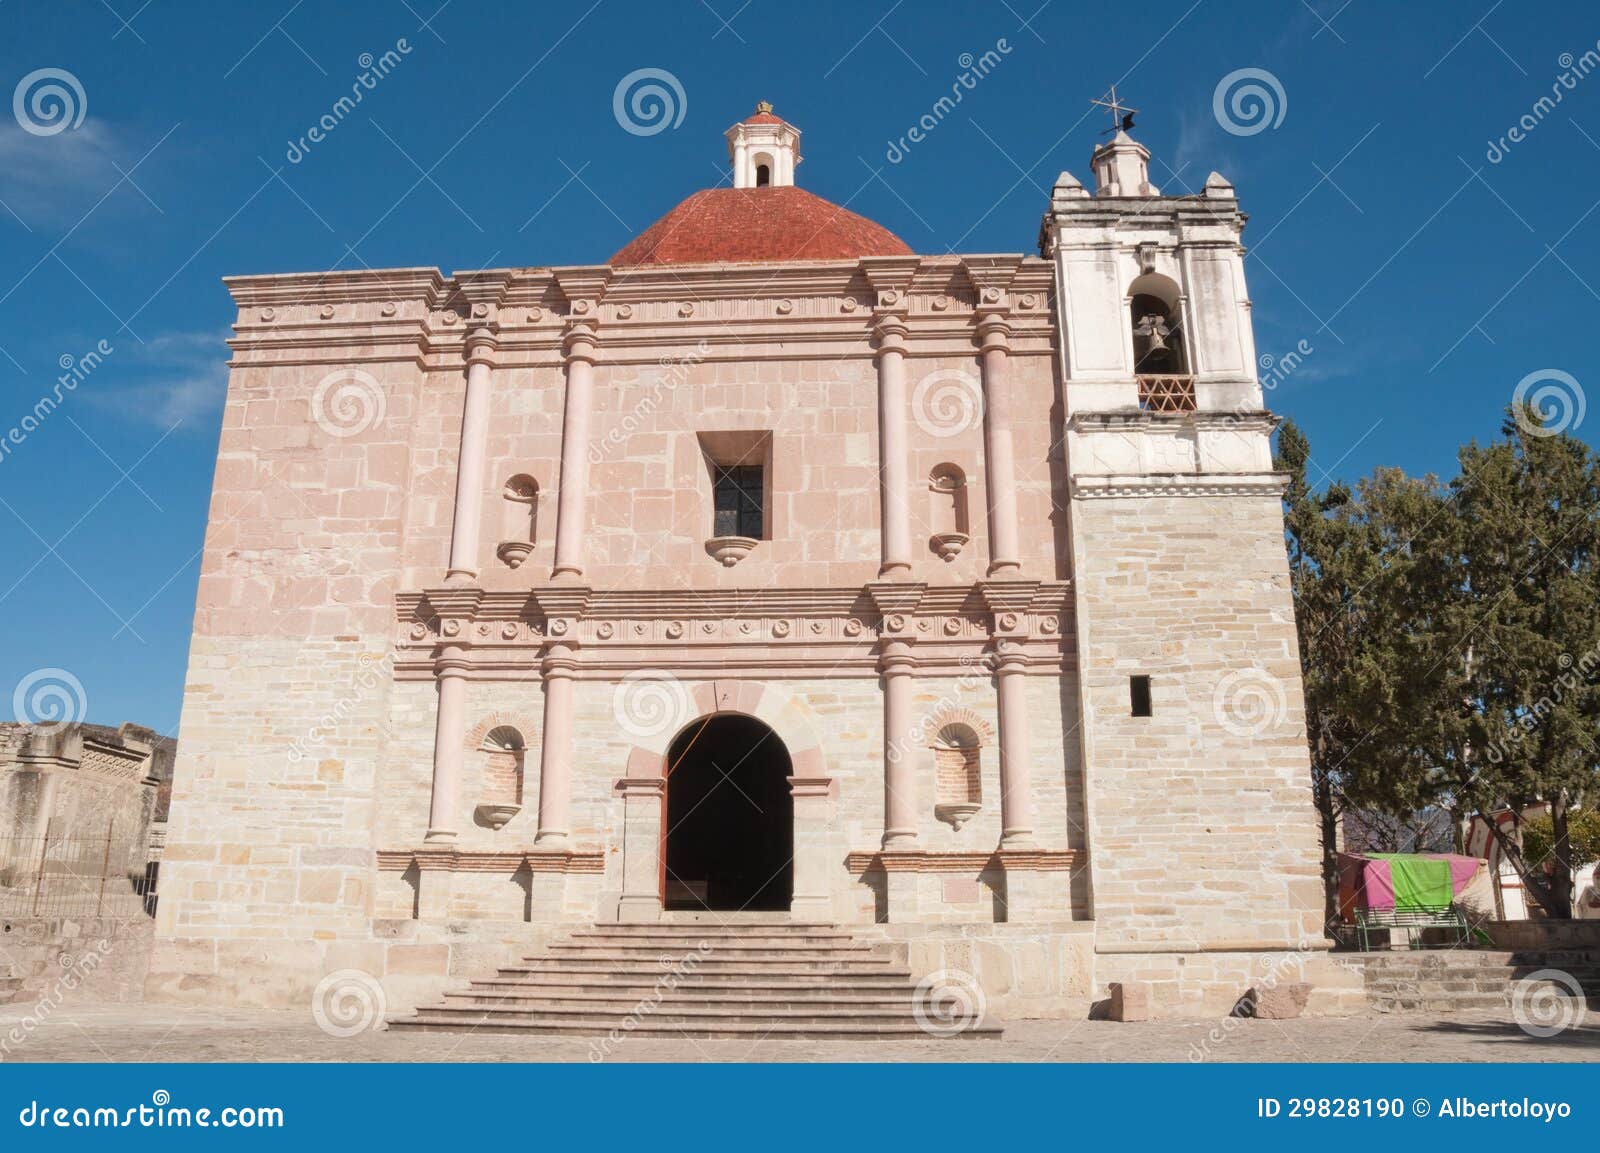 church of san pablo, mitla, oaxaca (mexico)